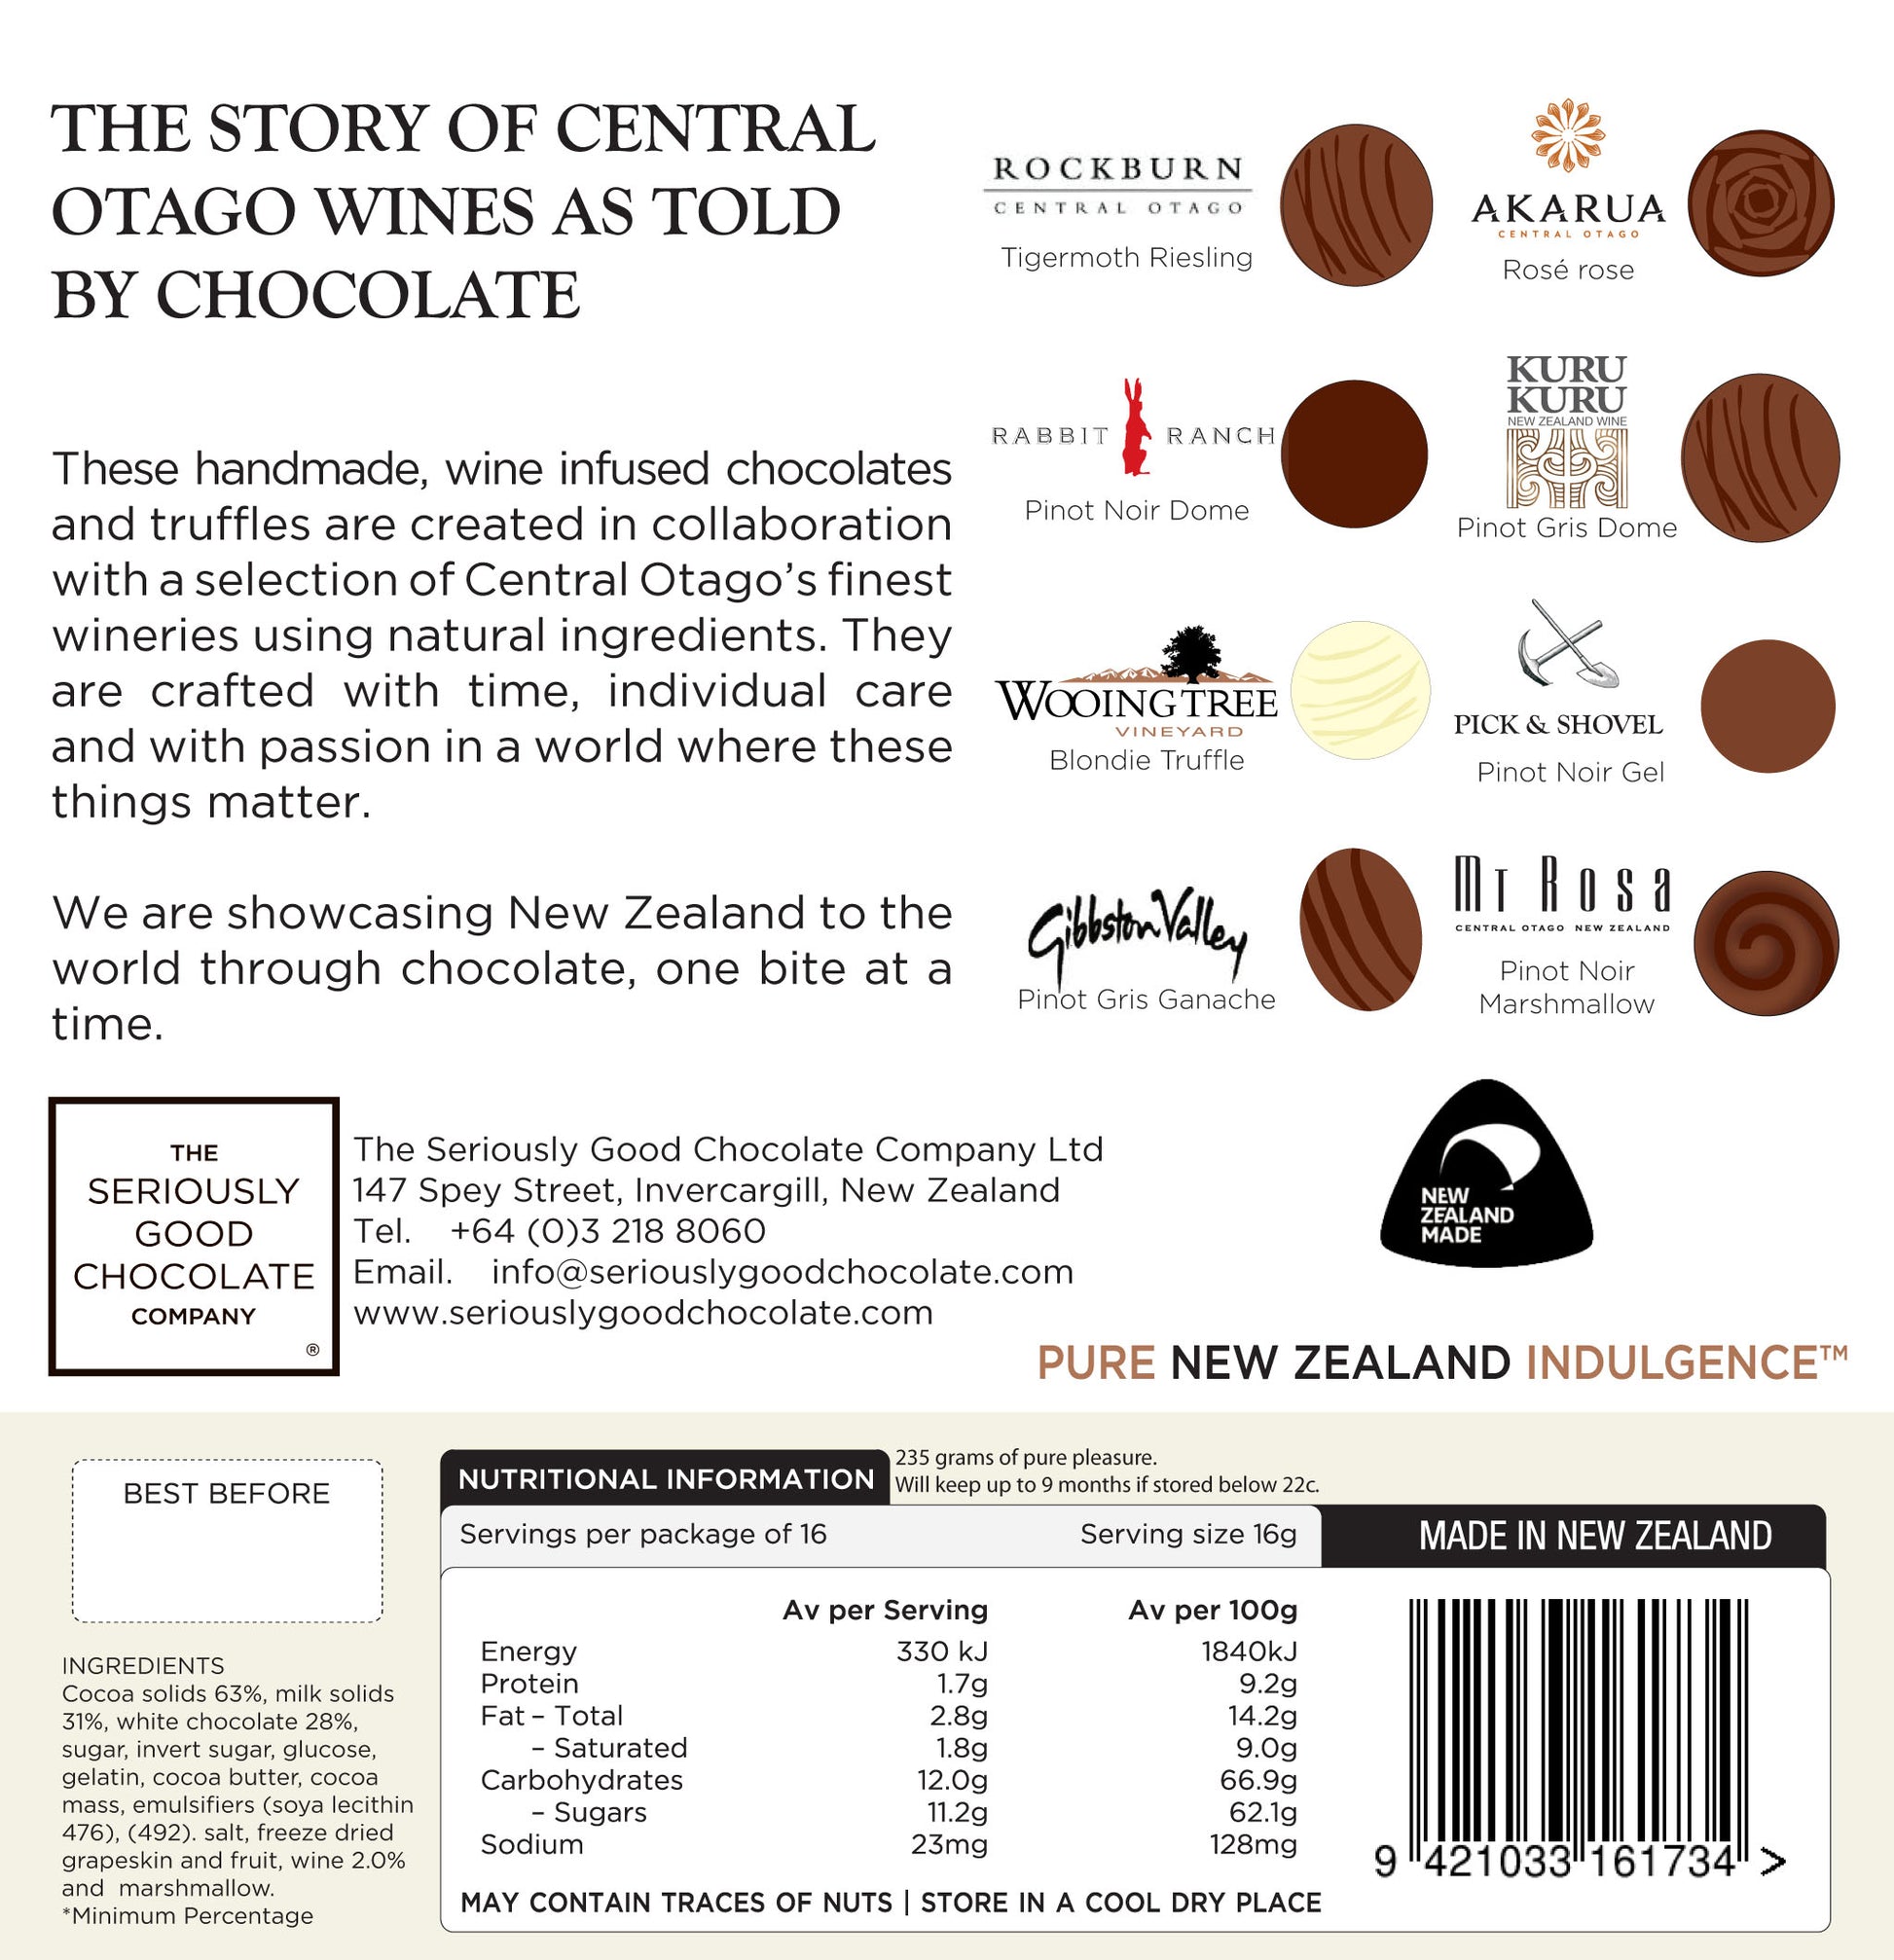 Central Otago Wine Story told by chocolte, made in southland new zealand. Gibbston Vallet Kuru kuru, rockburn, rabbit ranch, wooing tree, mt rose and akarua